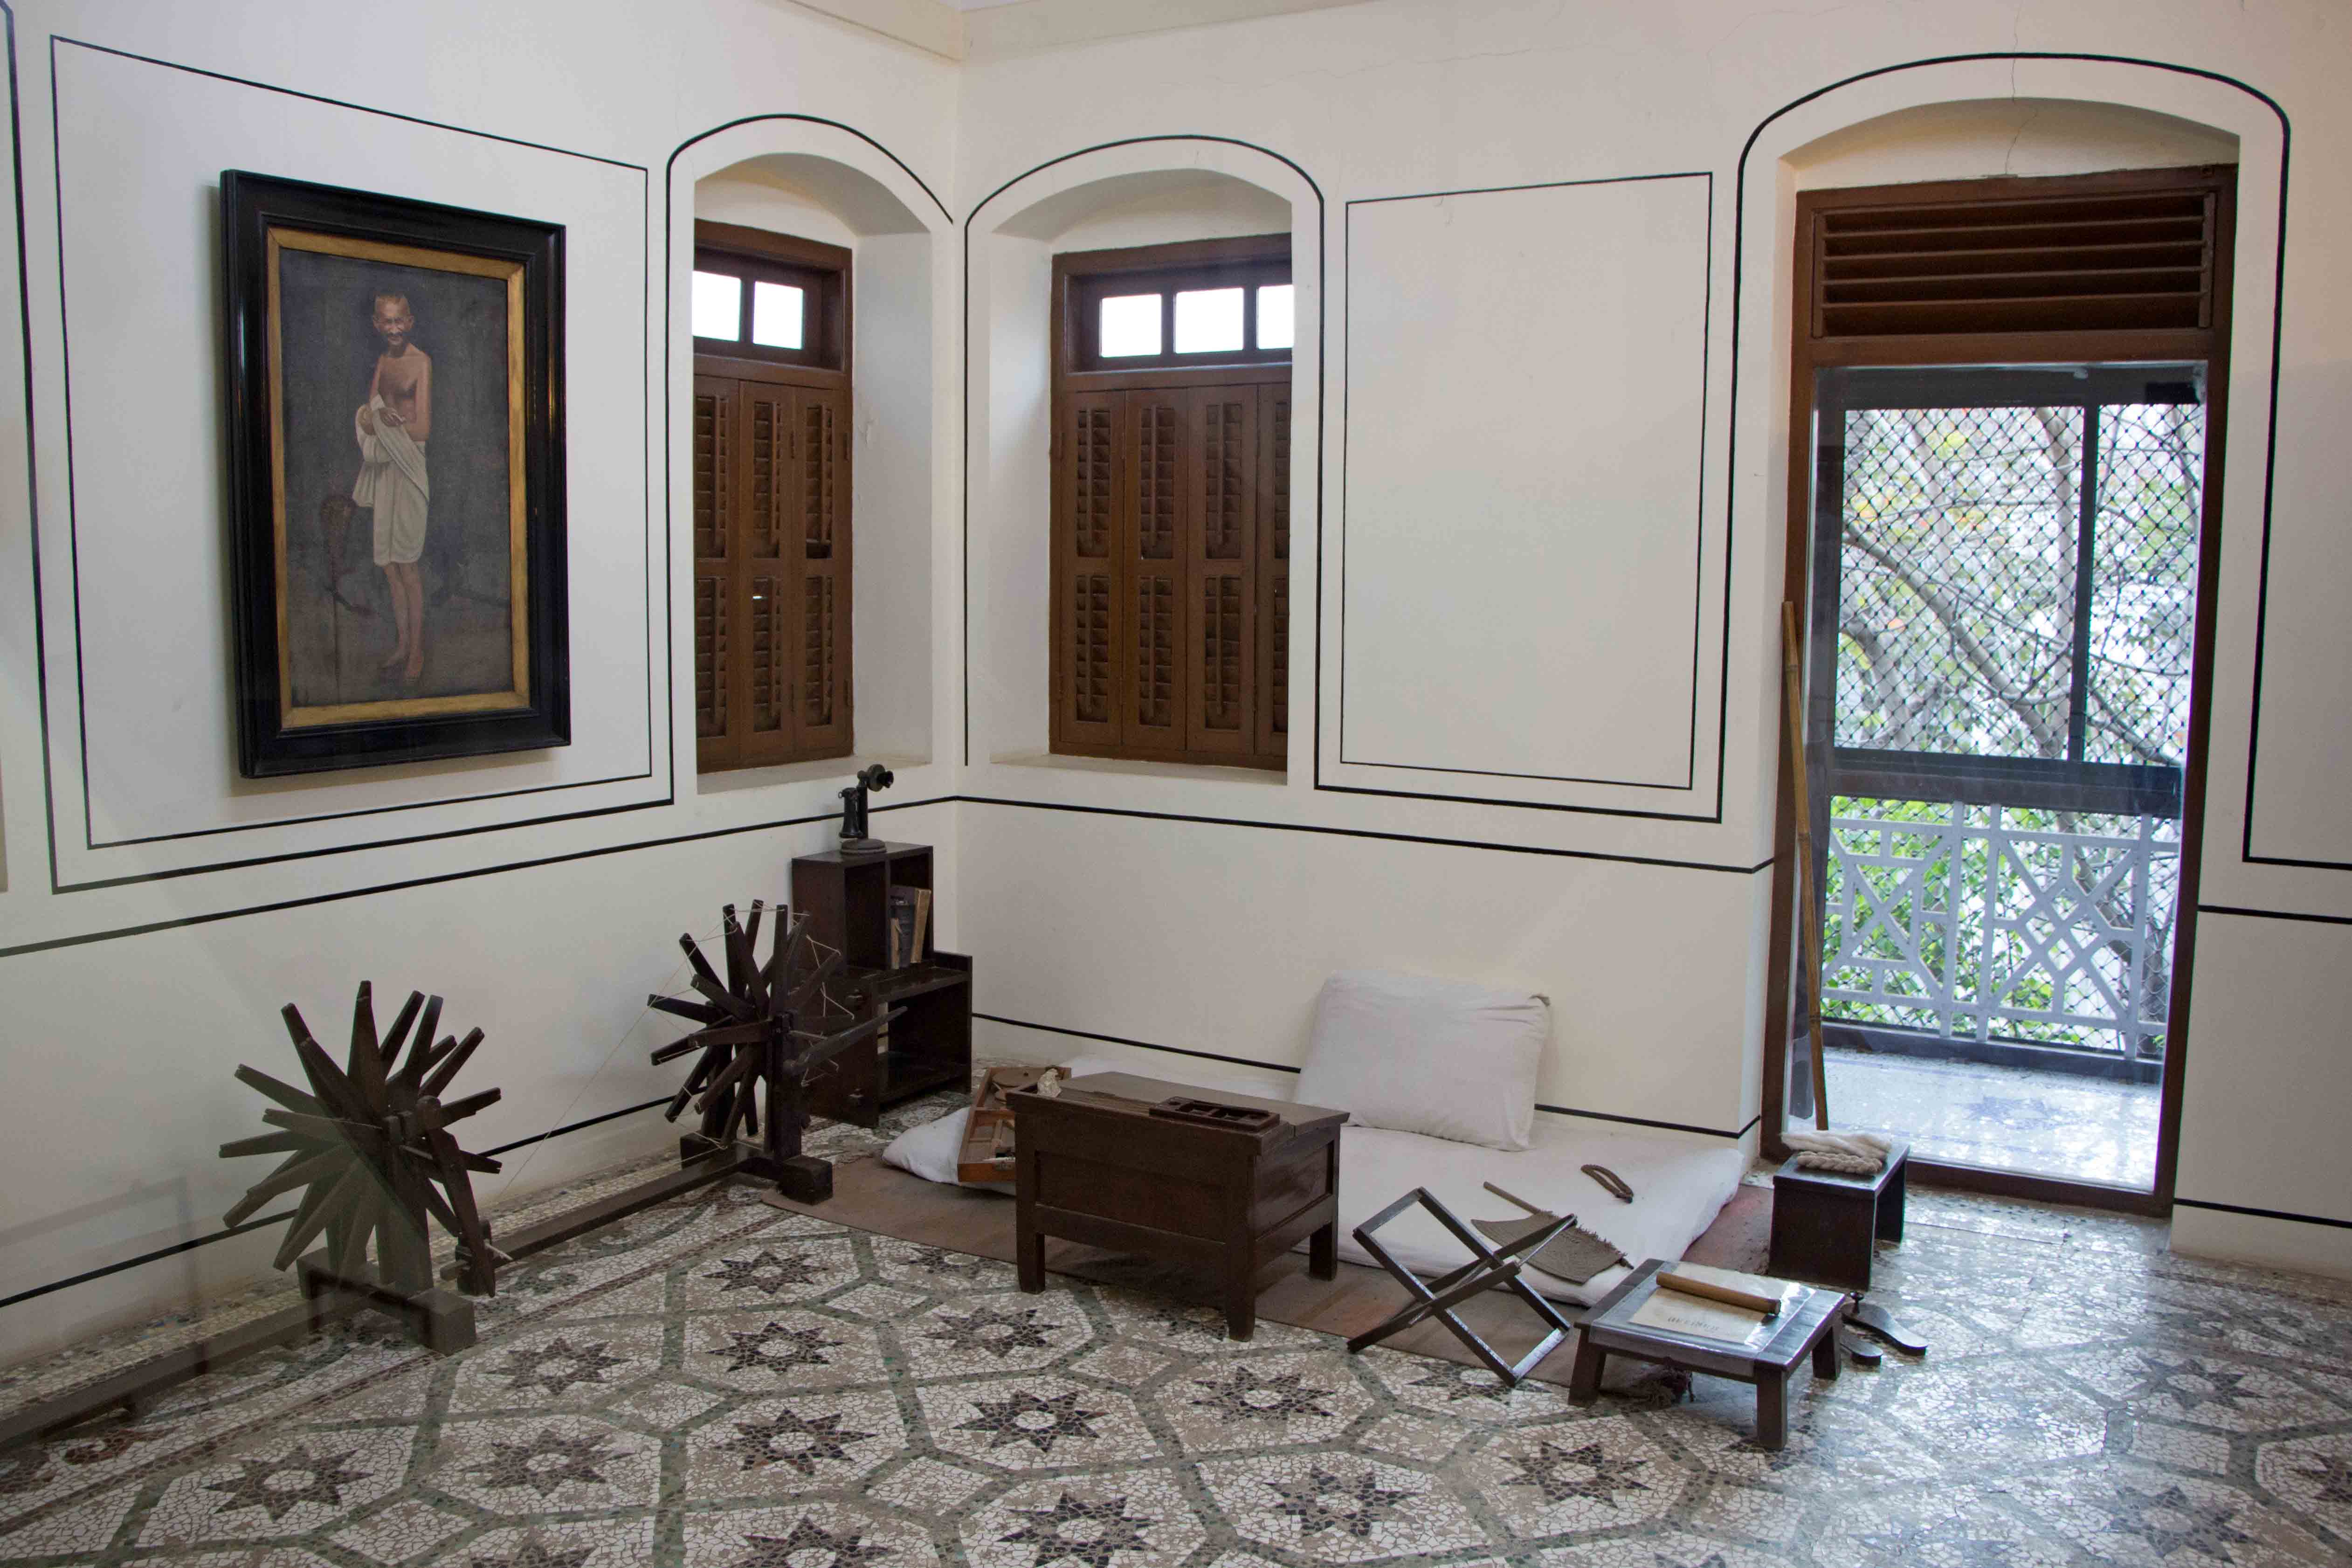 Gandhi's room at Mani Bhavan 